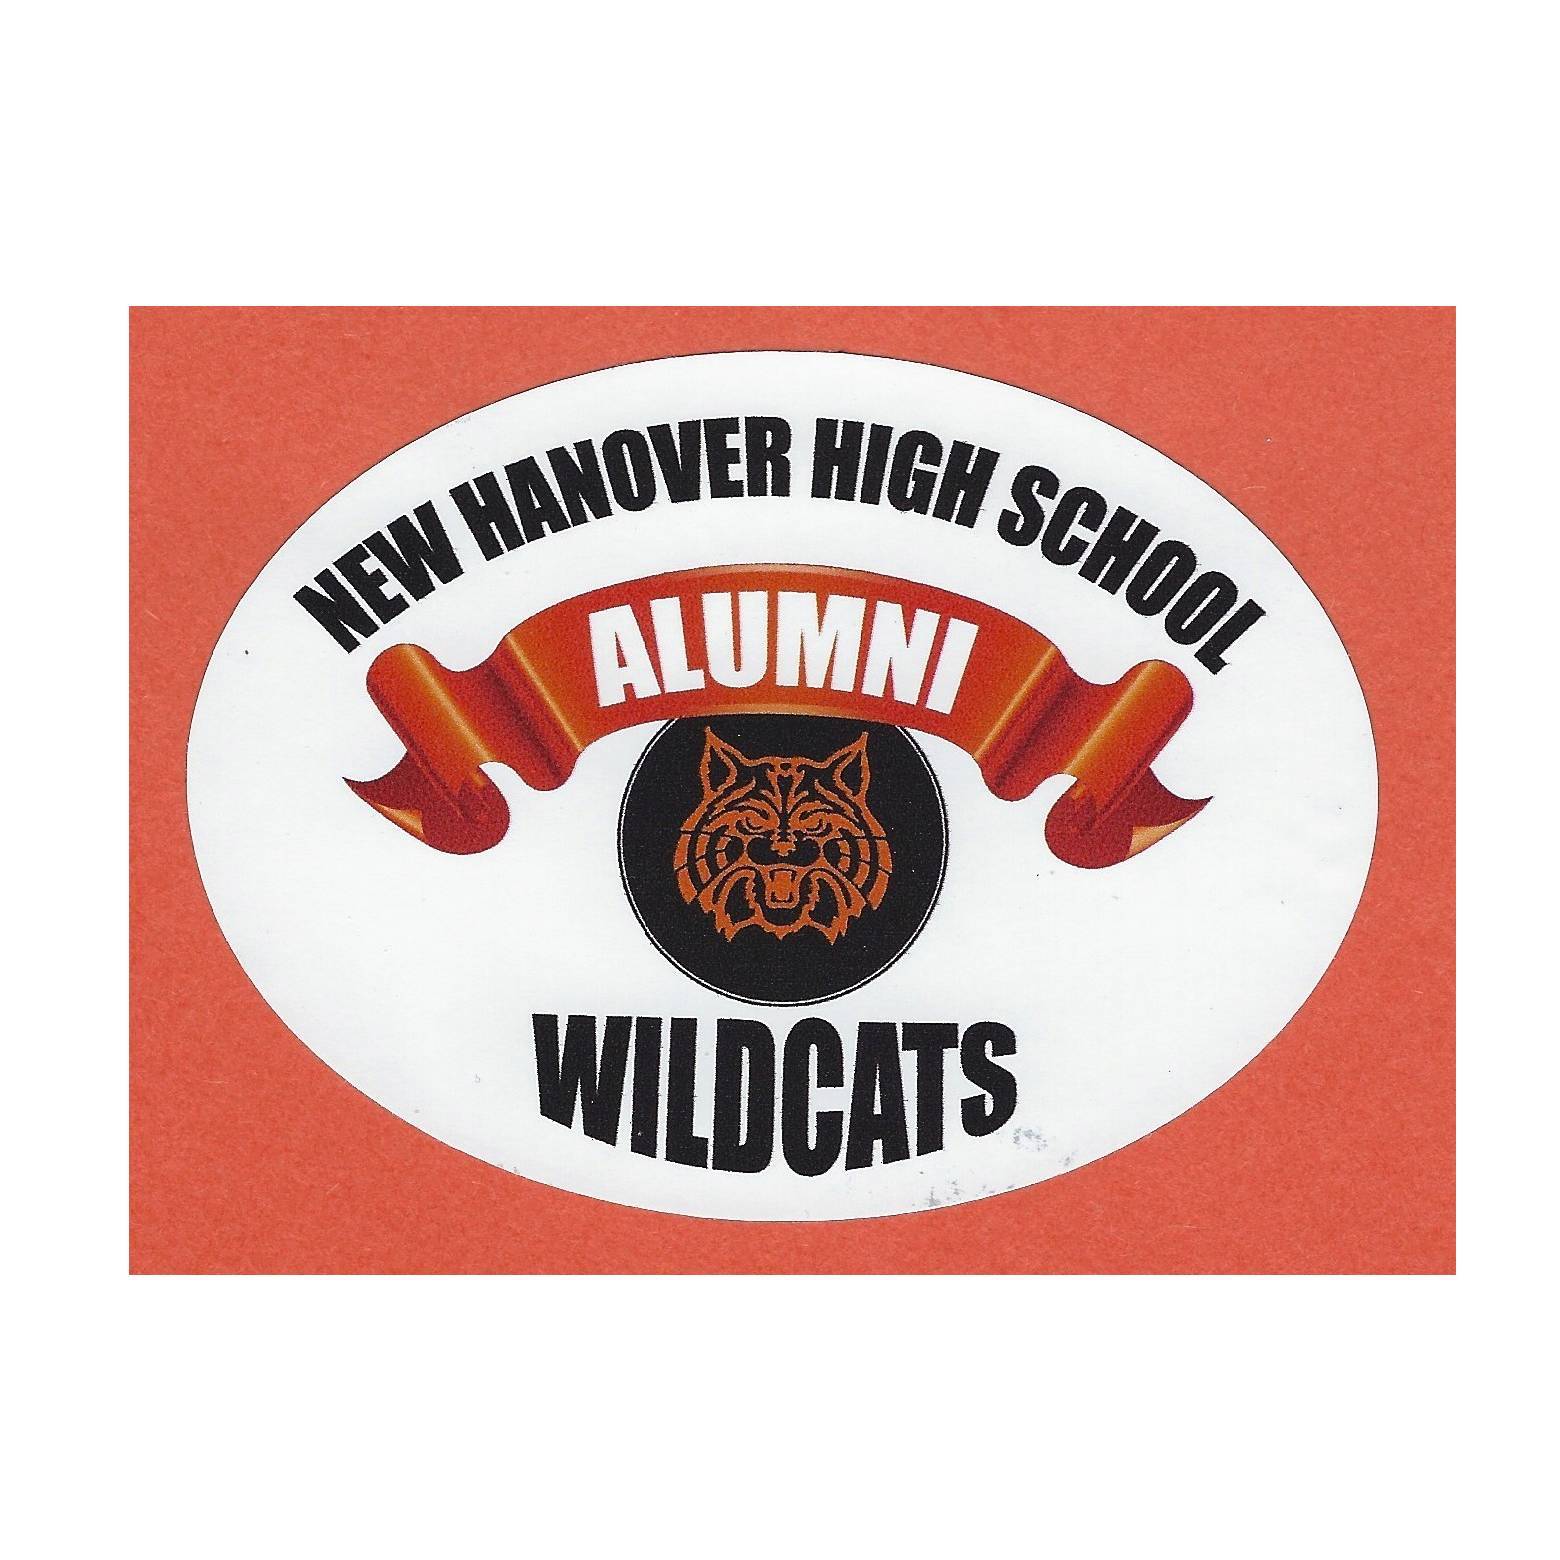 New Hanover High School Alumni Organization